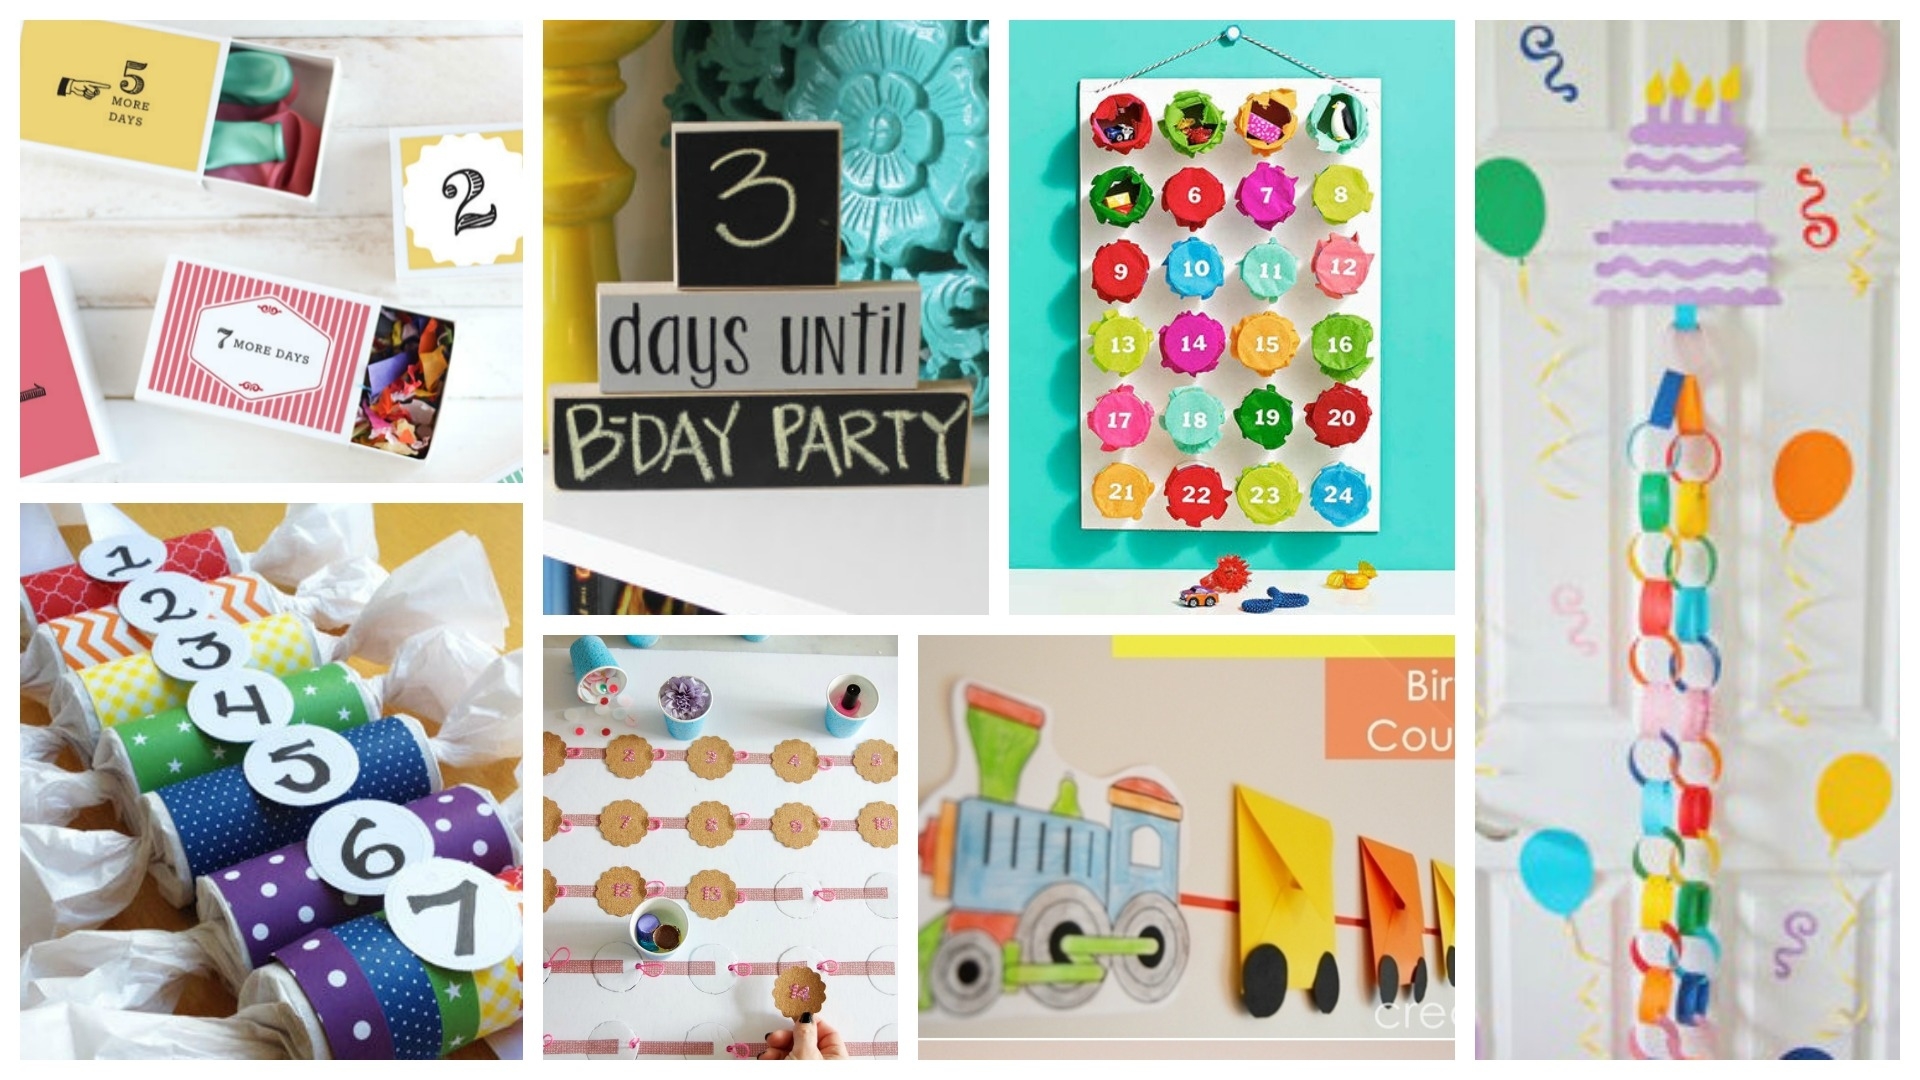 13 Diy Birthday Countdown Ideas Your Kid Will Love With Unique Design A Countdown Calendar